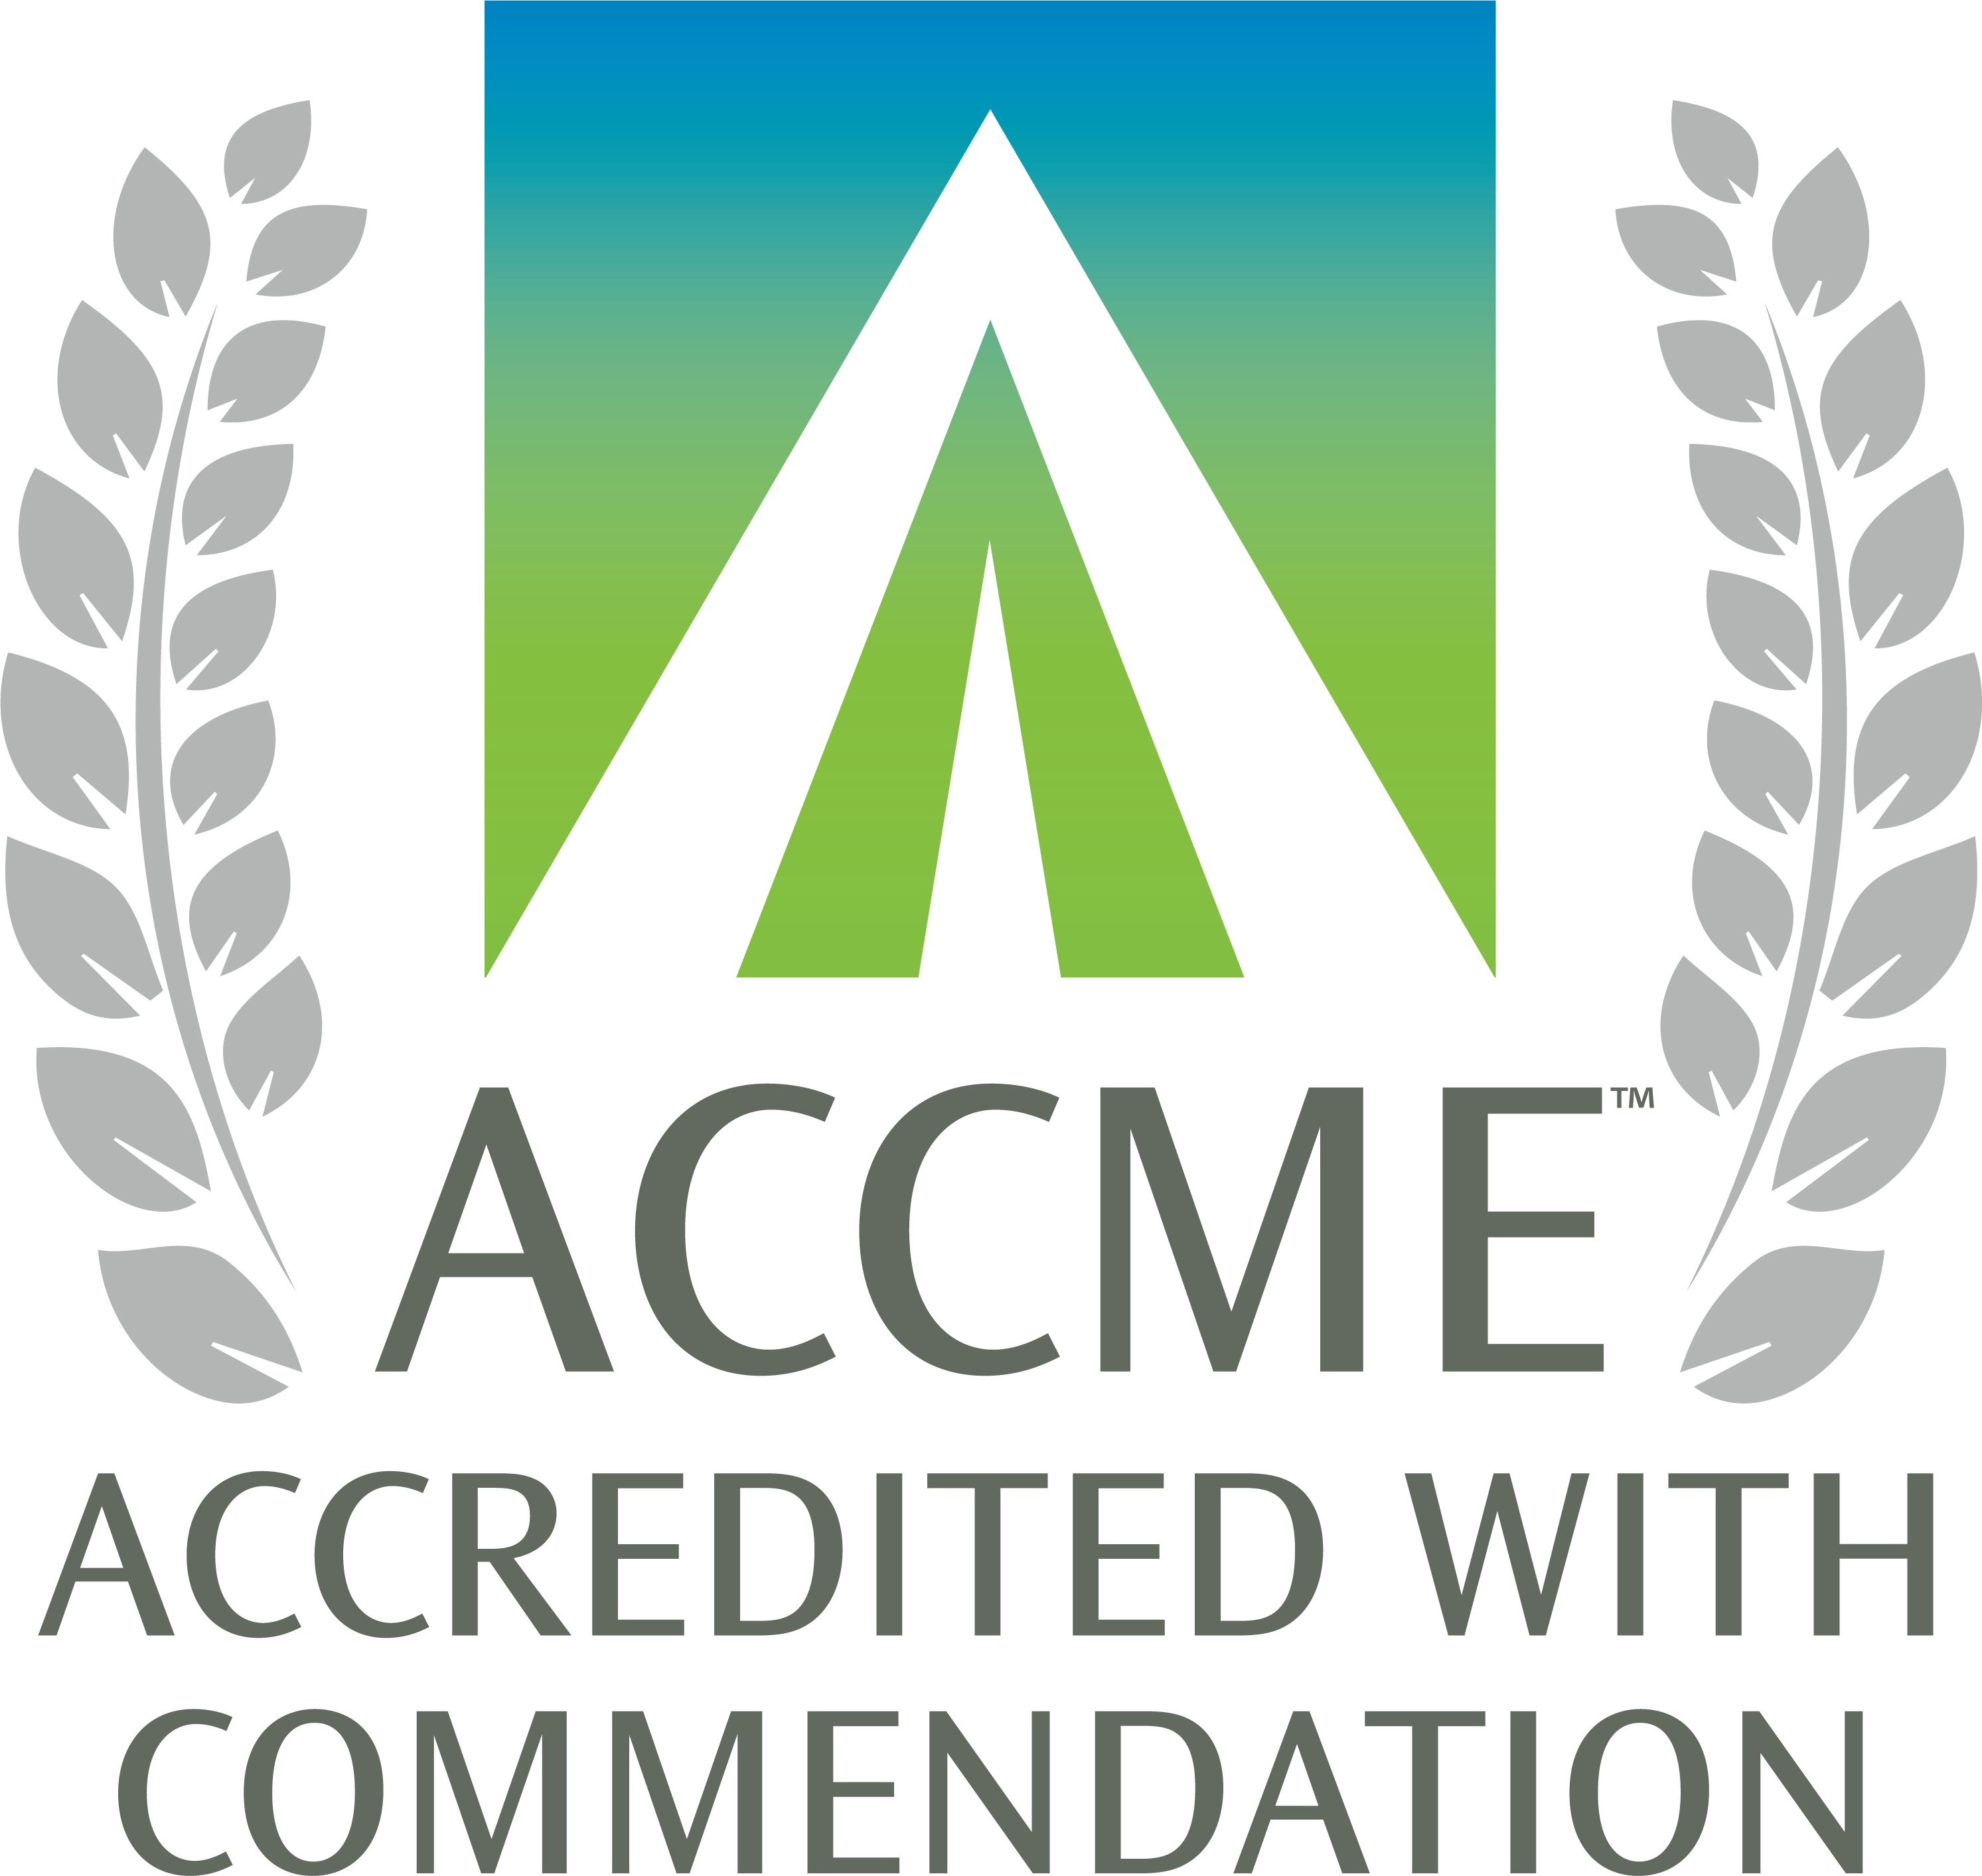 ACCME Accreditation Mark